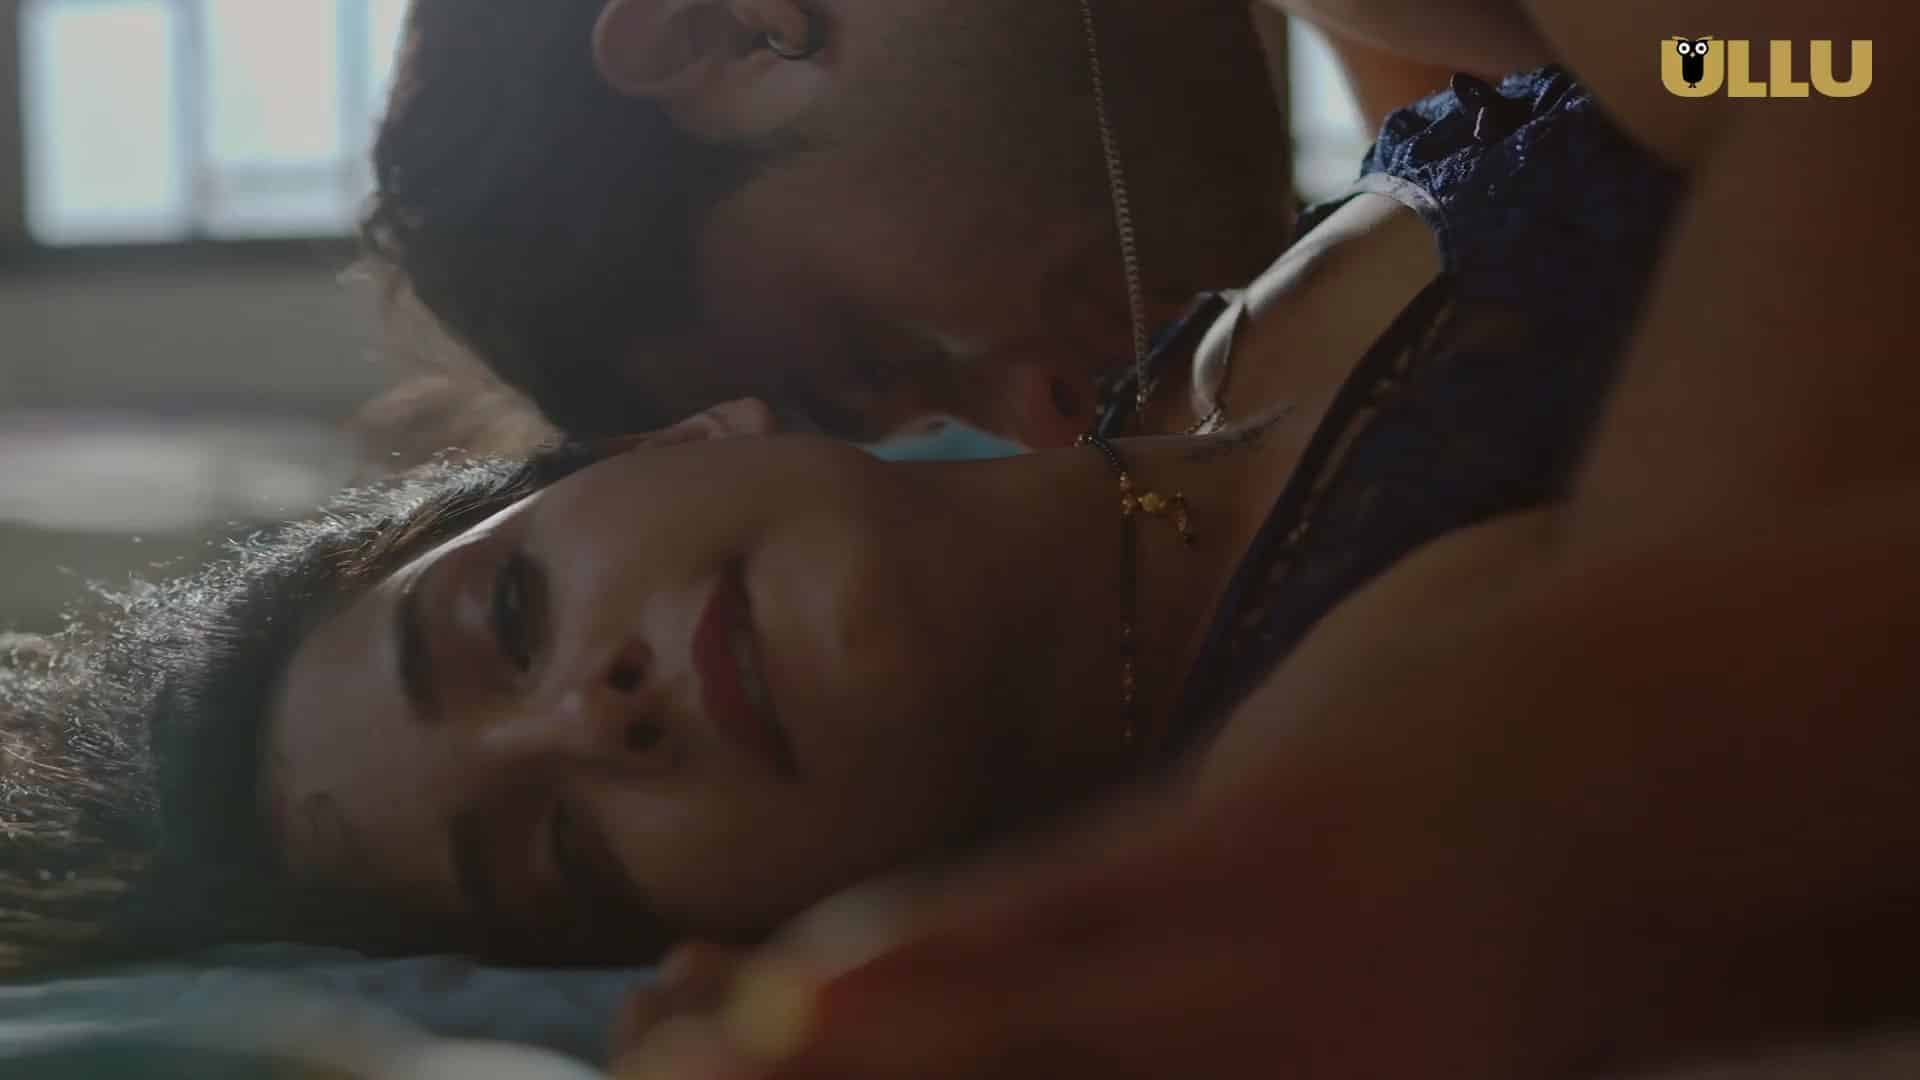 hindi hot sex video - Page 3 of 33 - XNXX TV